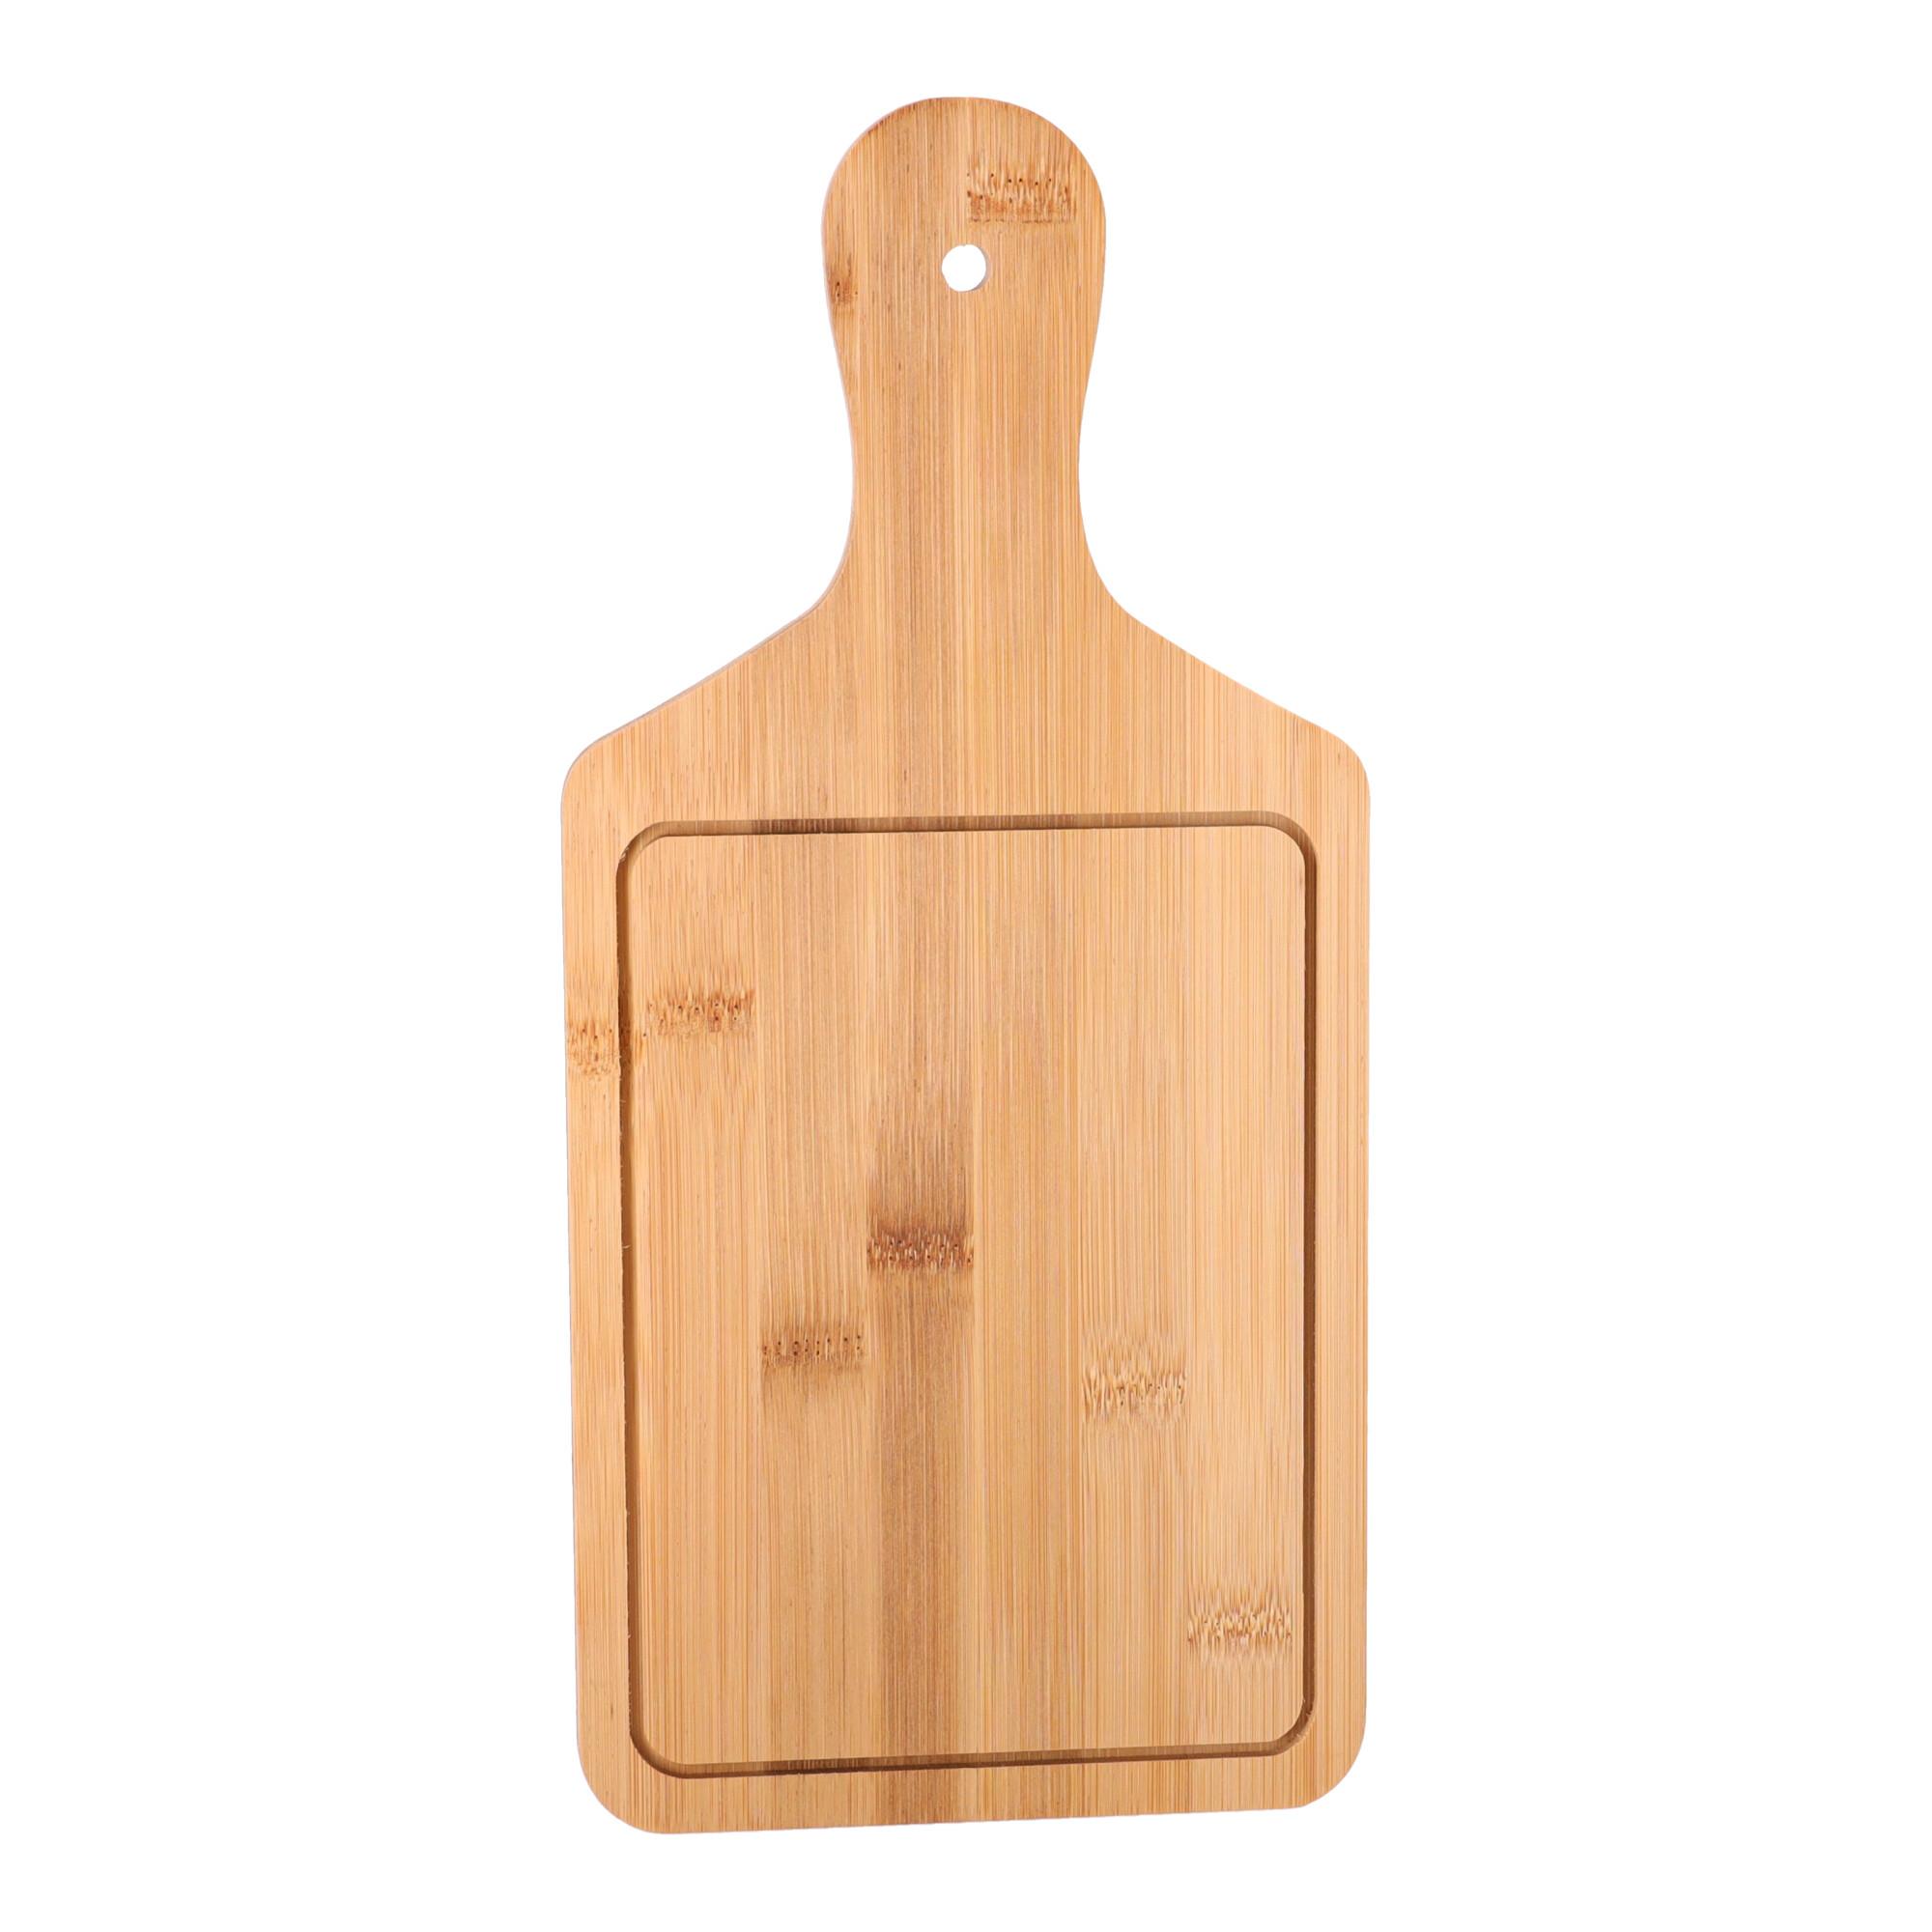 Wooden pizza board - rectangular, small